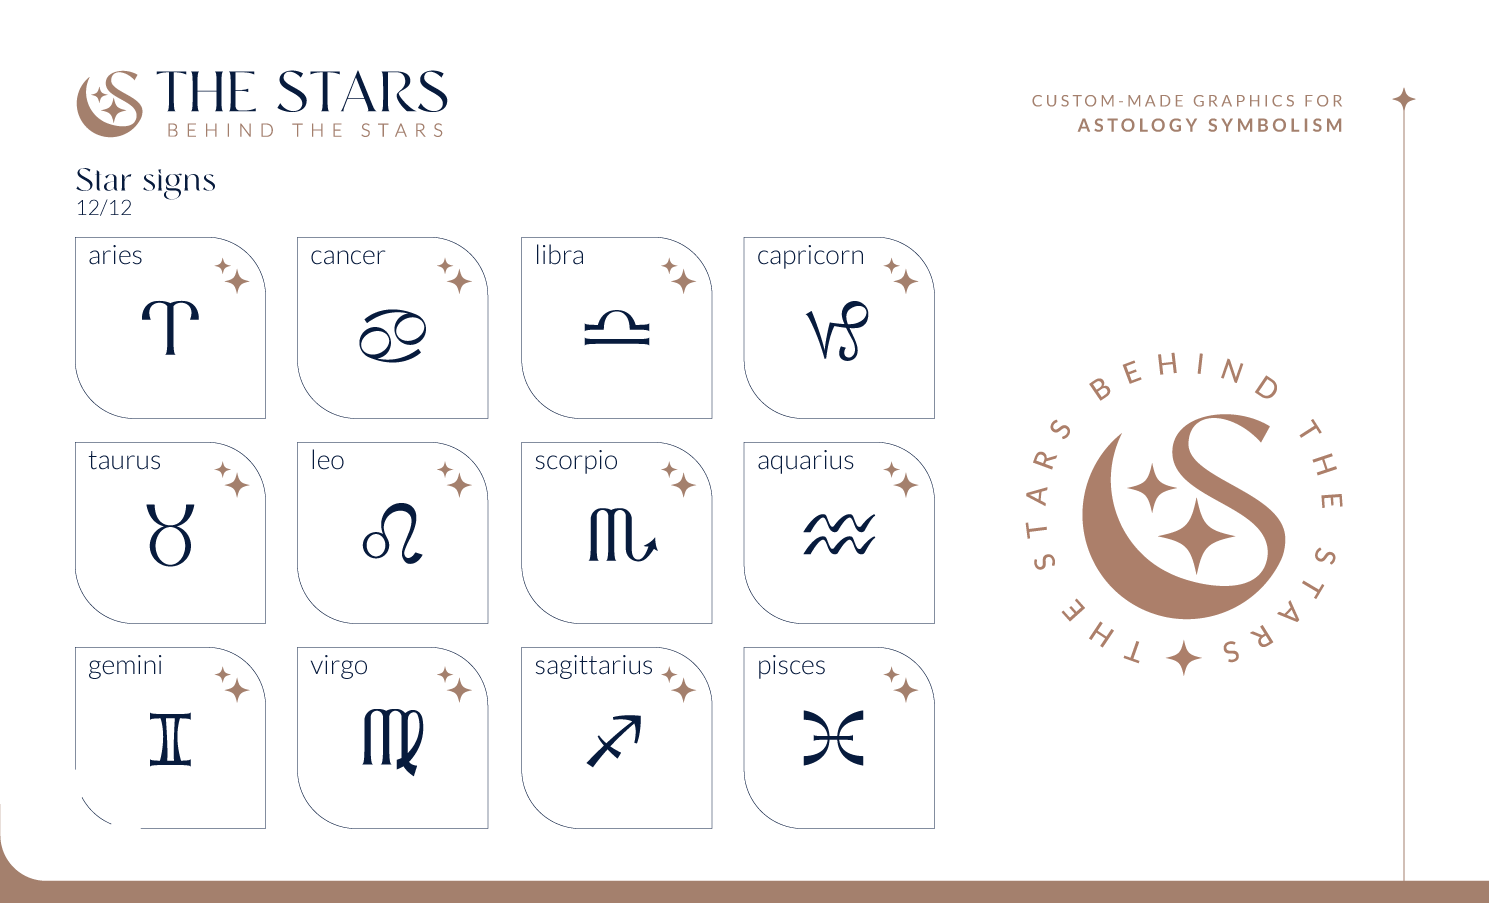 Astrology-symbolism.png